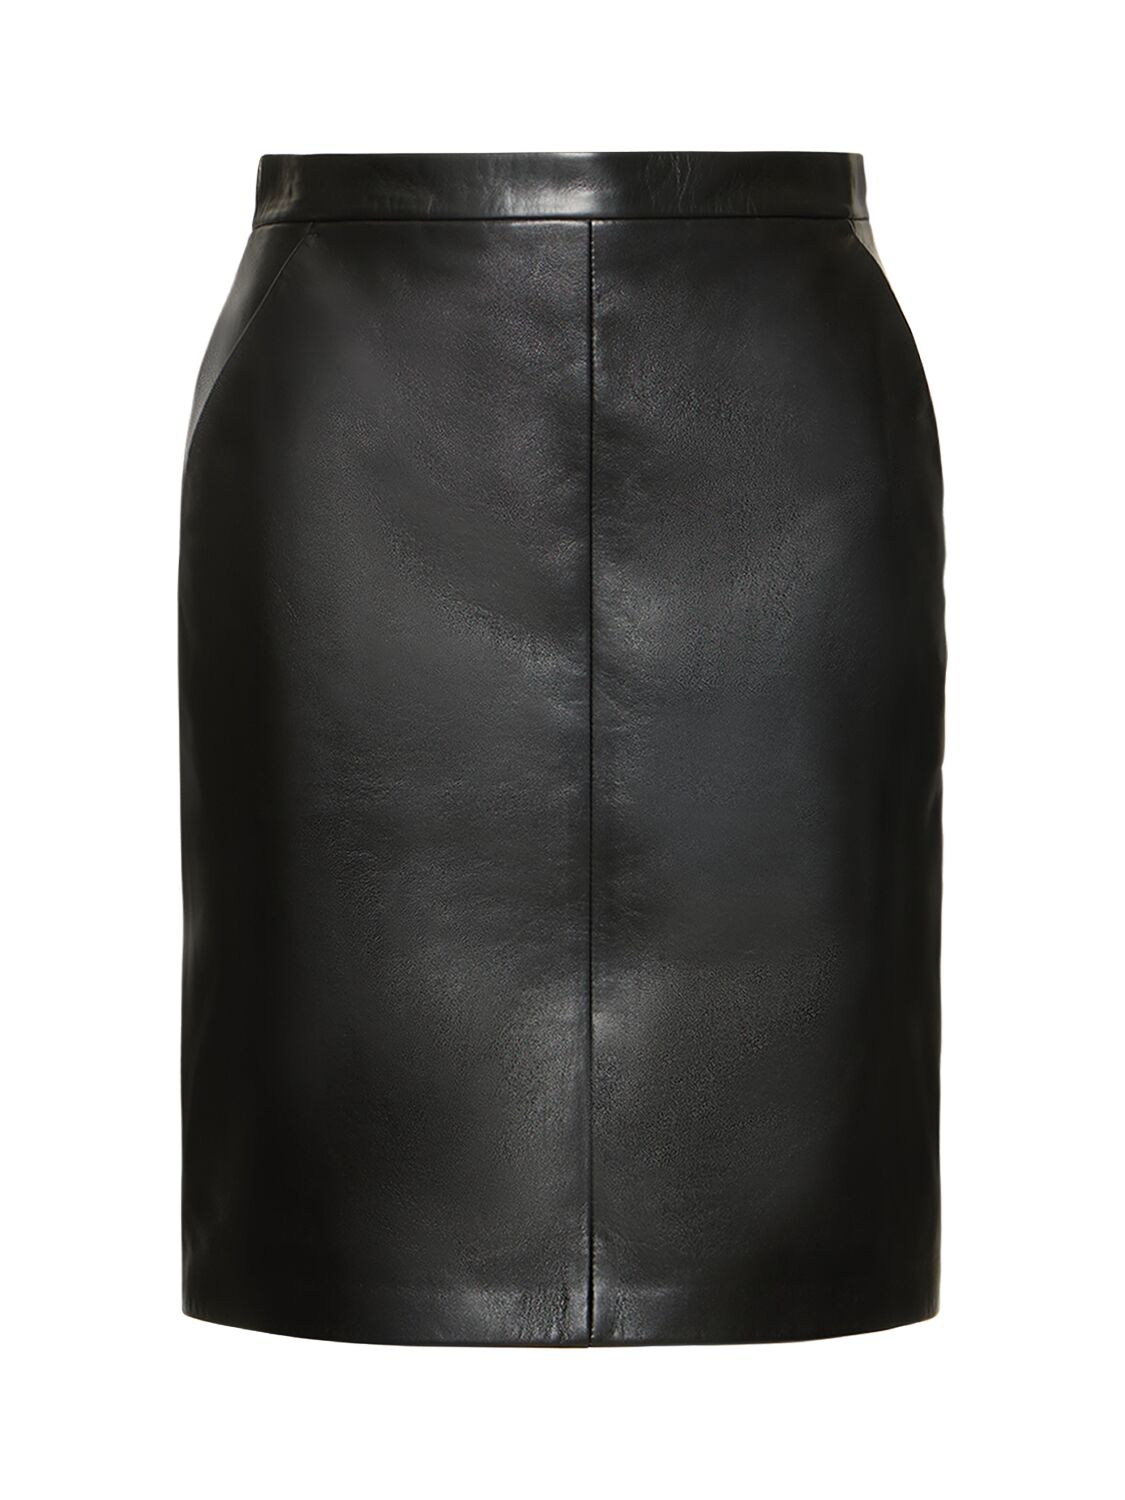 Saint Laurent Leather Pencil Skirt In Black